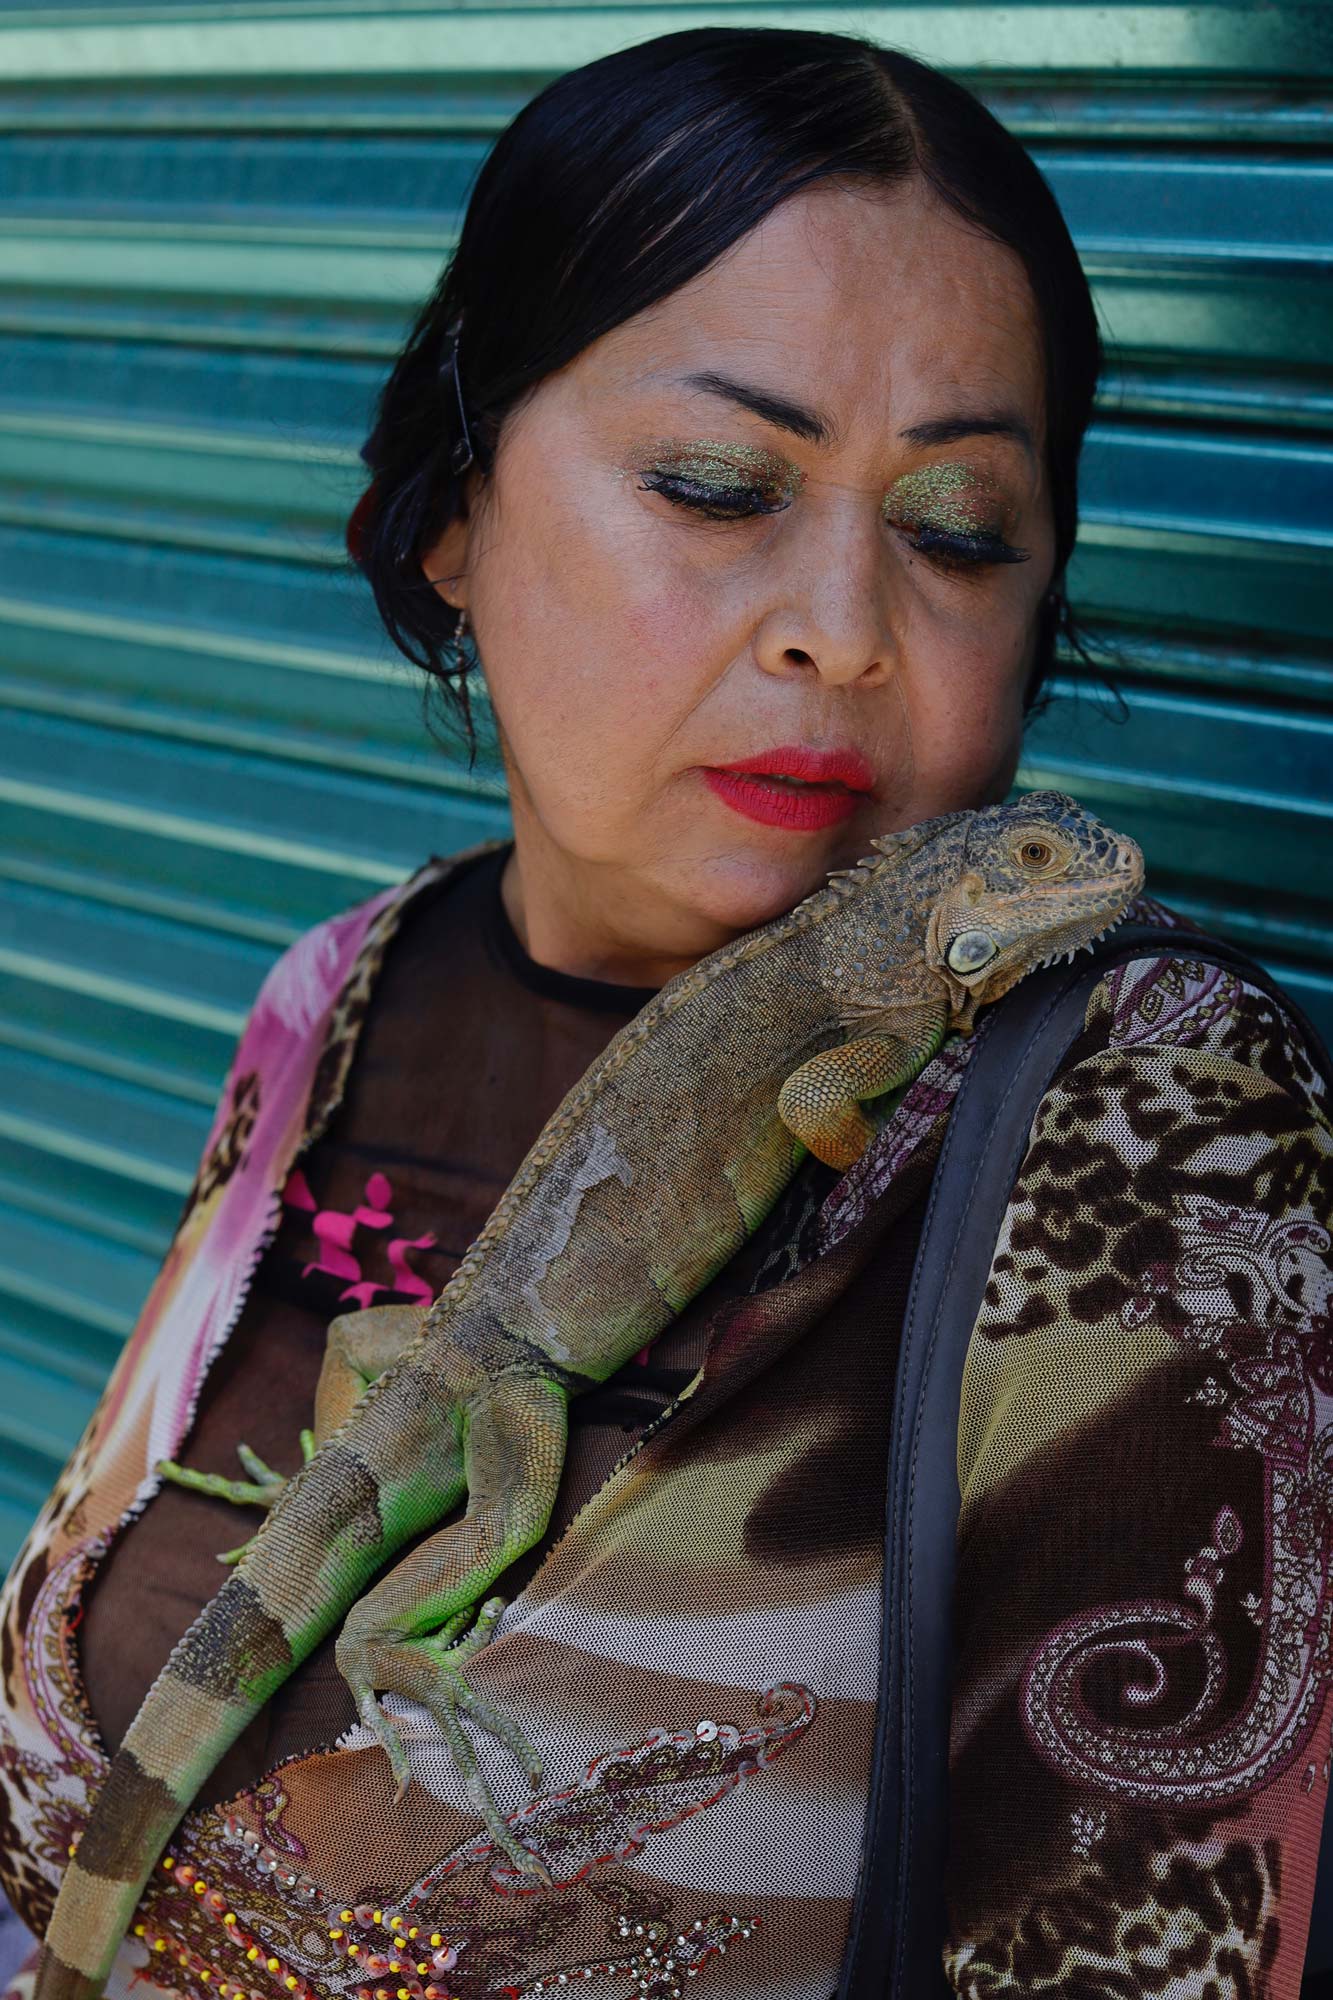 Una mujer con una iguana